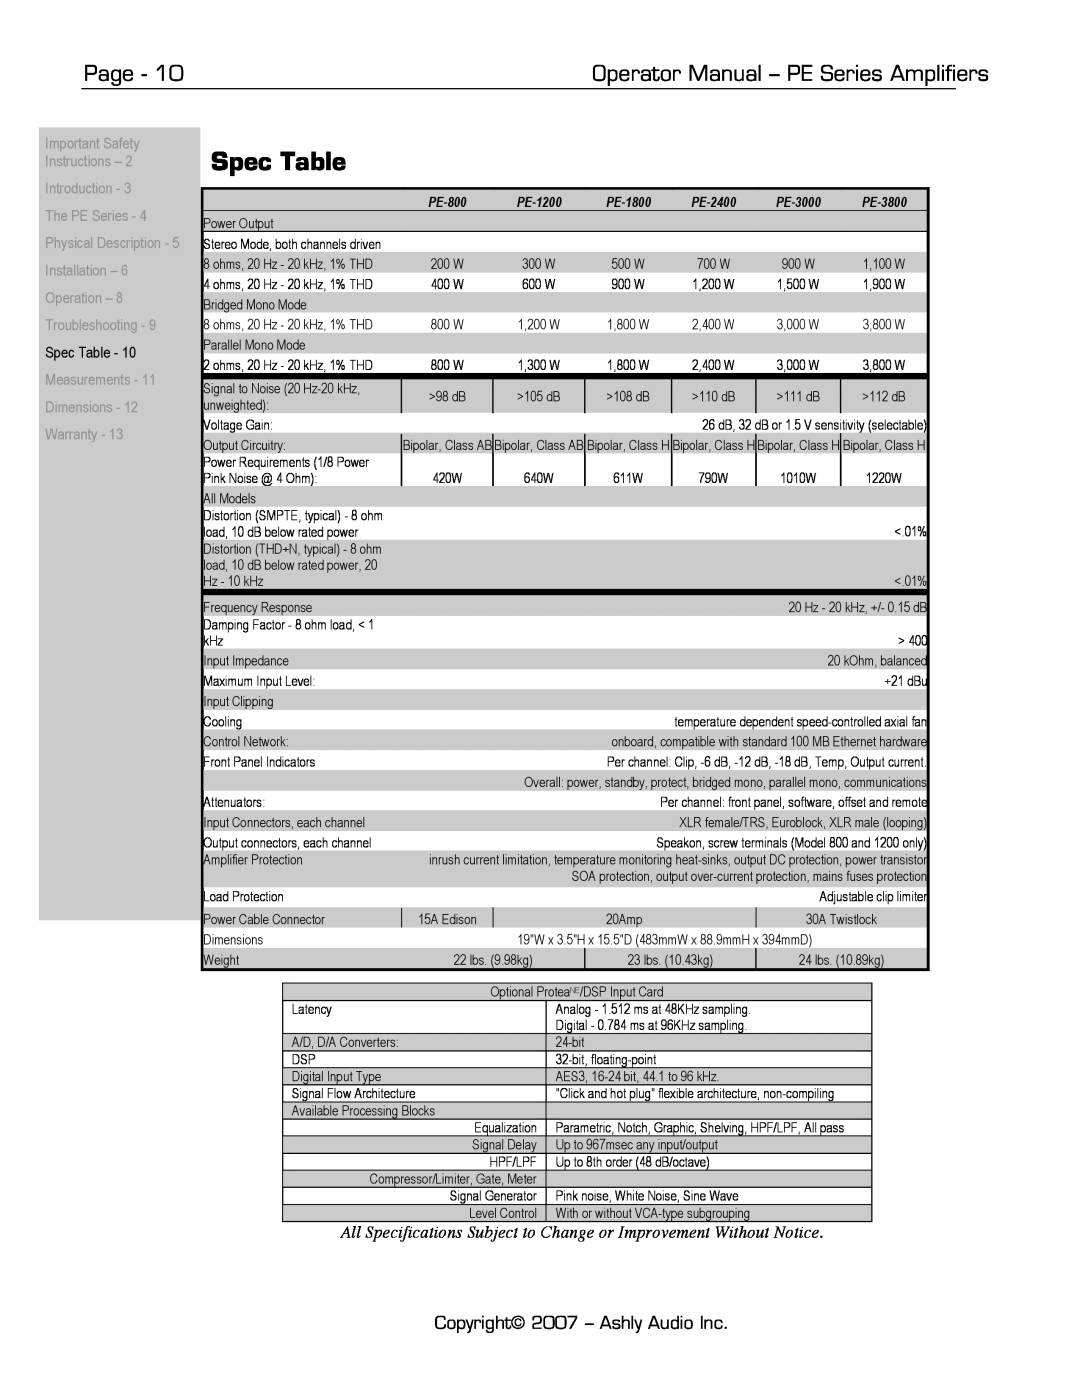 Ashly manual Spec Table, Page, Operator Manual - PE Series Amplifiers, Copyright 2007 - Ashly Audio Inc, PE-800, PE-1200 